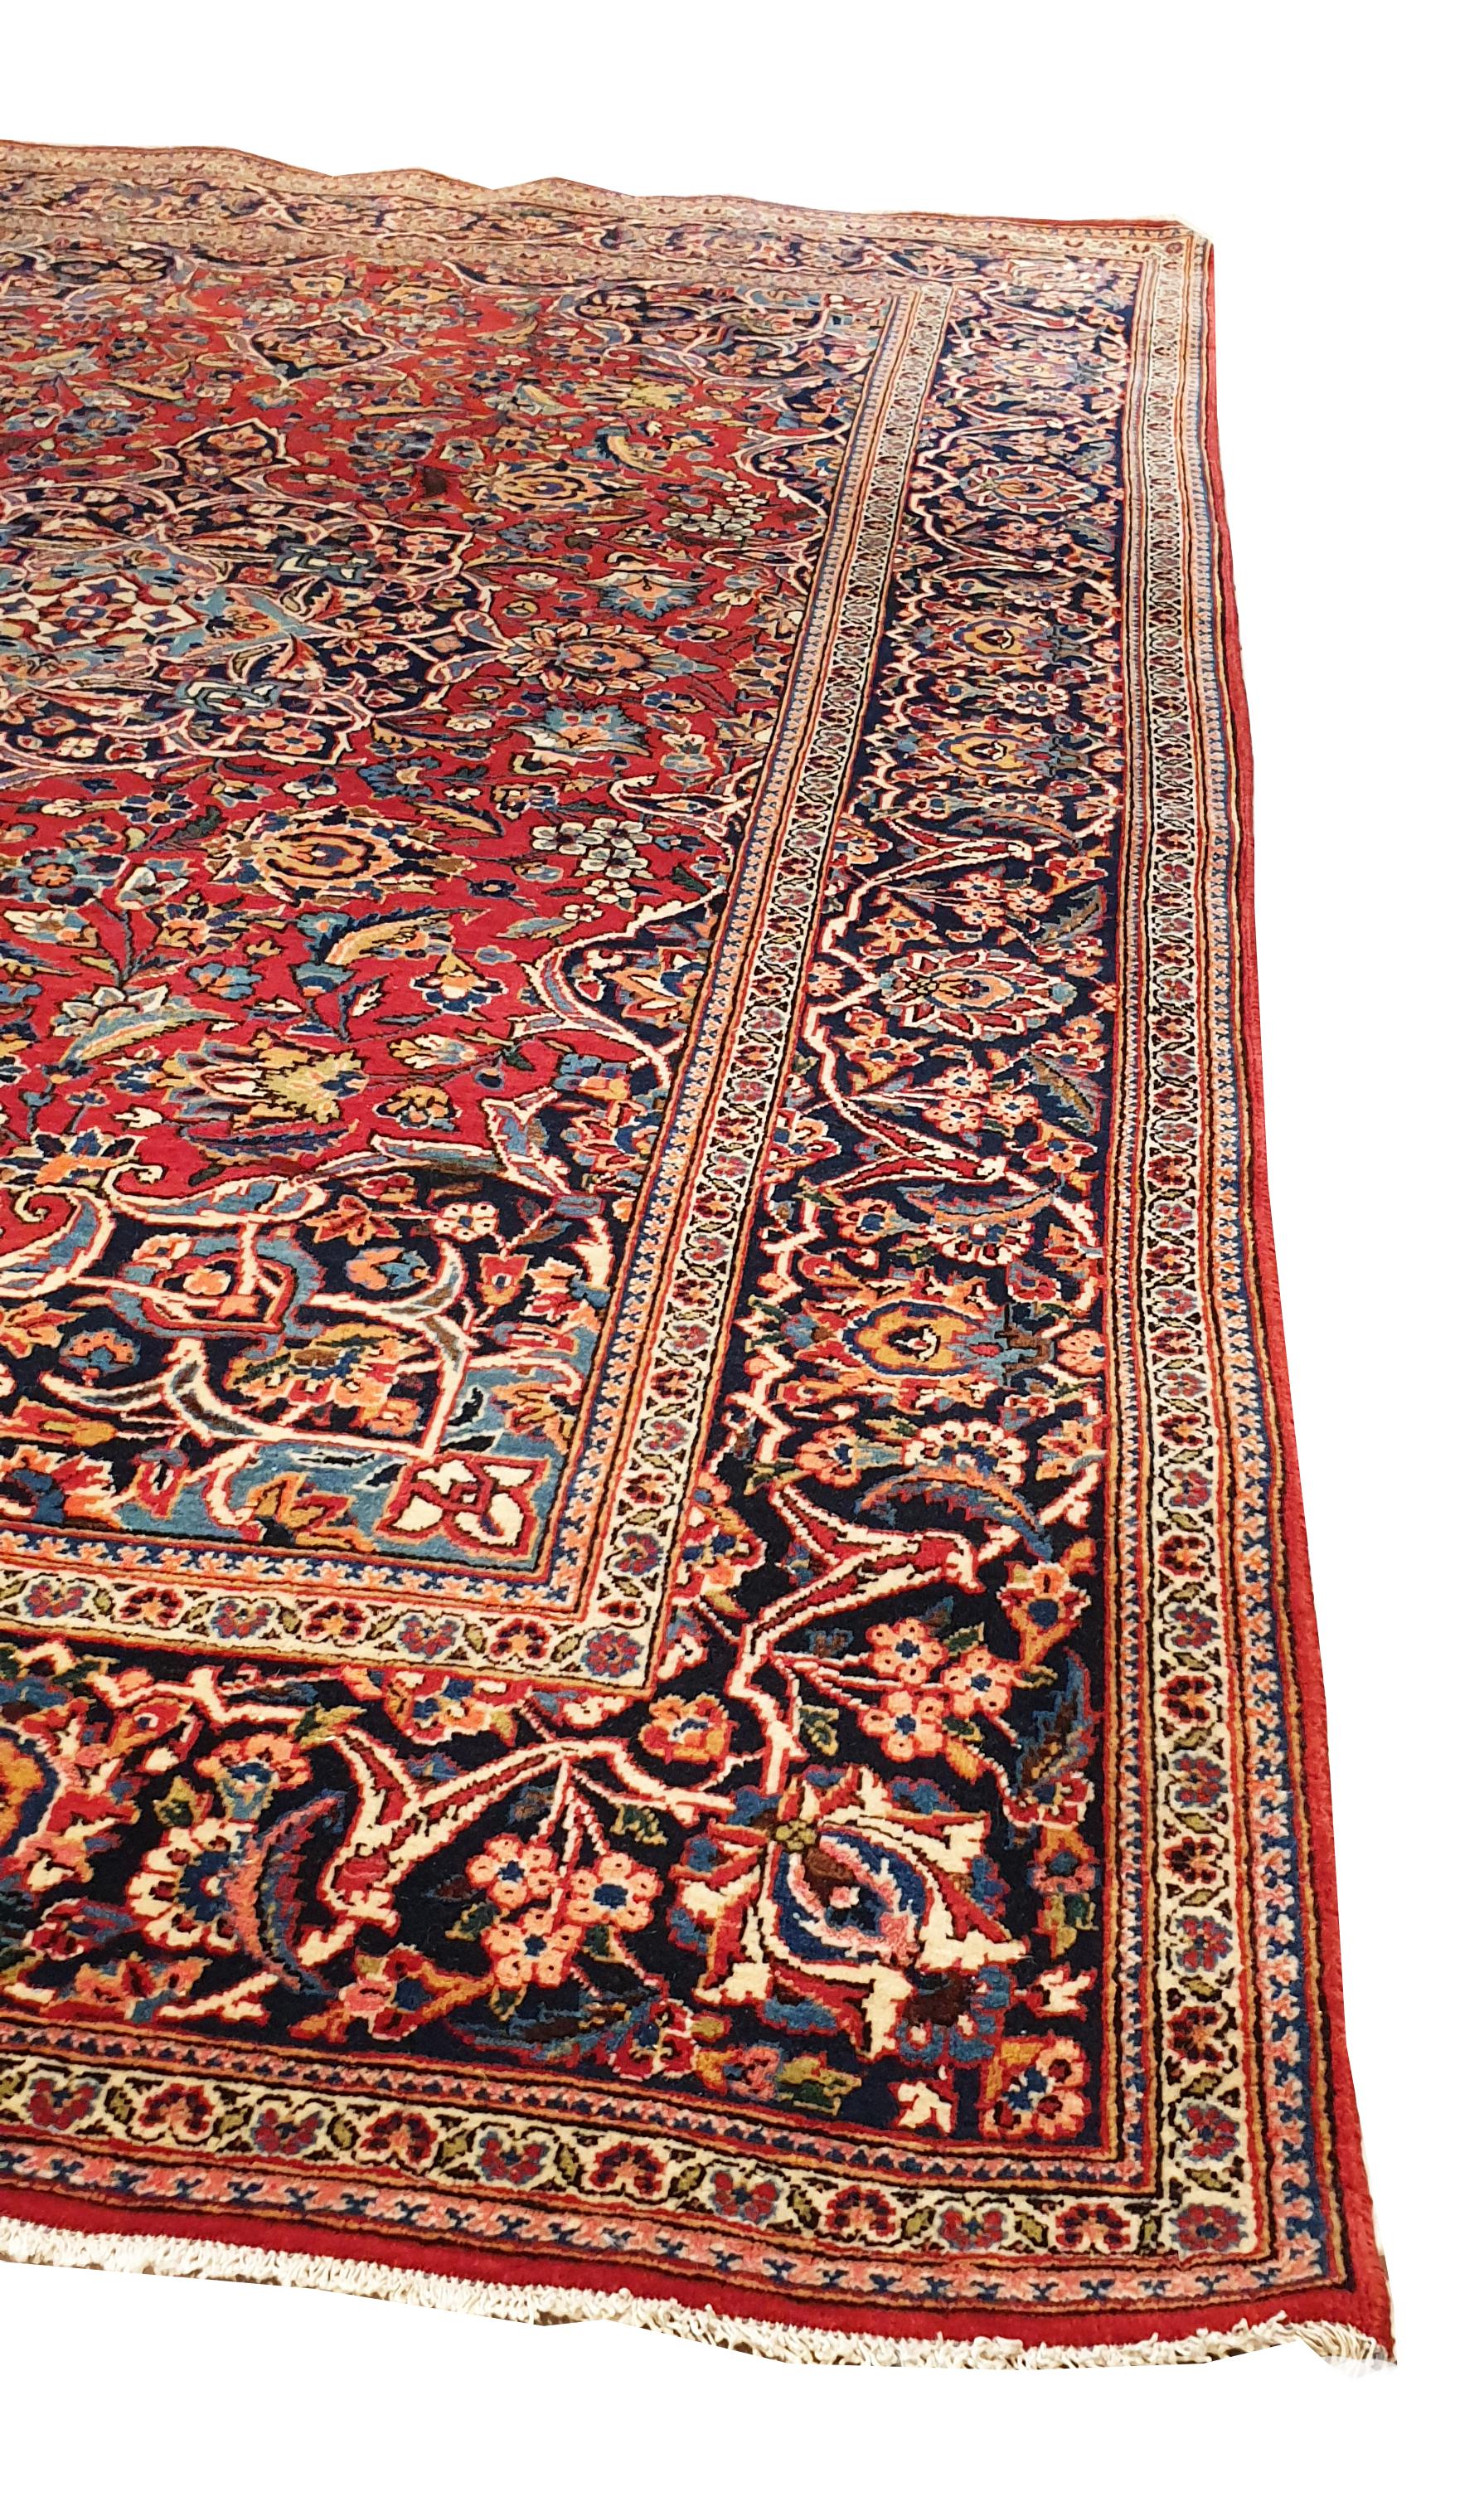 Turkish Oriental Carpet, 20th Century - N° 731 For Sale